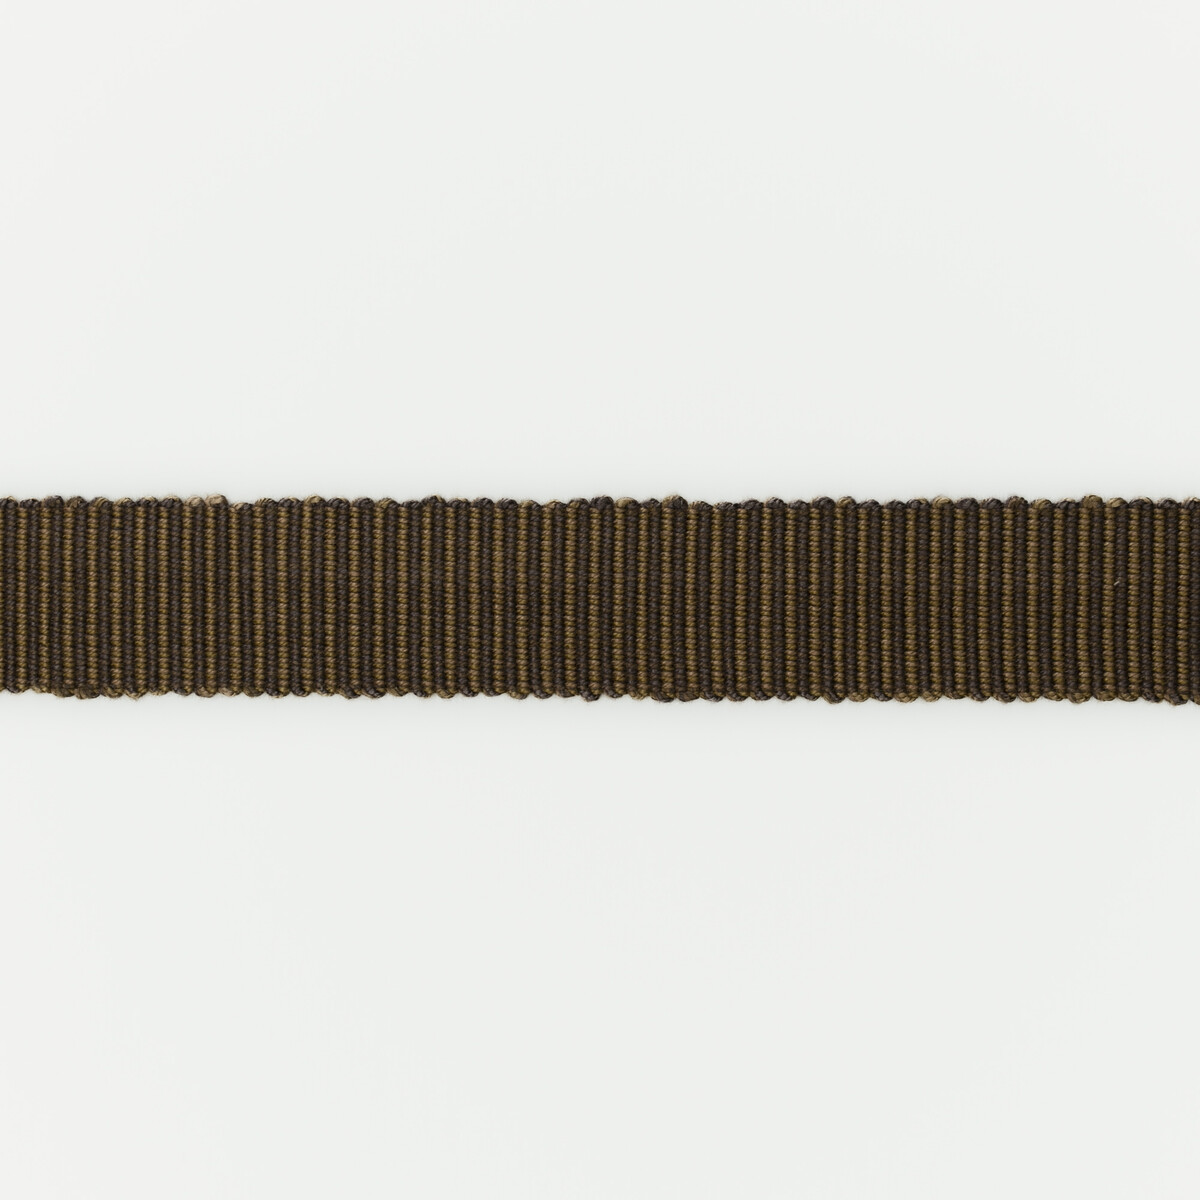 G P & J Baker T6026.290.0 Perandor Plain Braid Trim Fabric in Brown